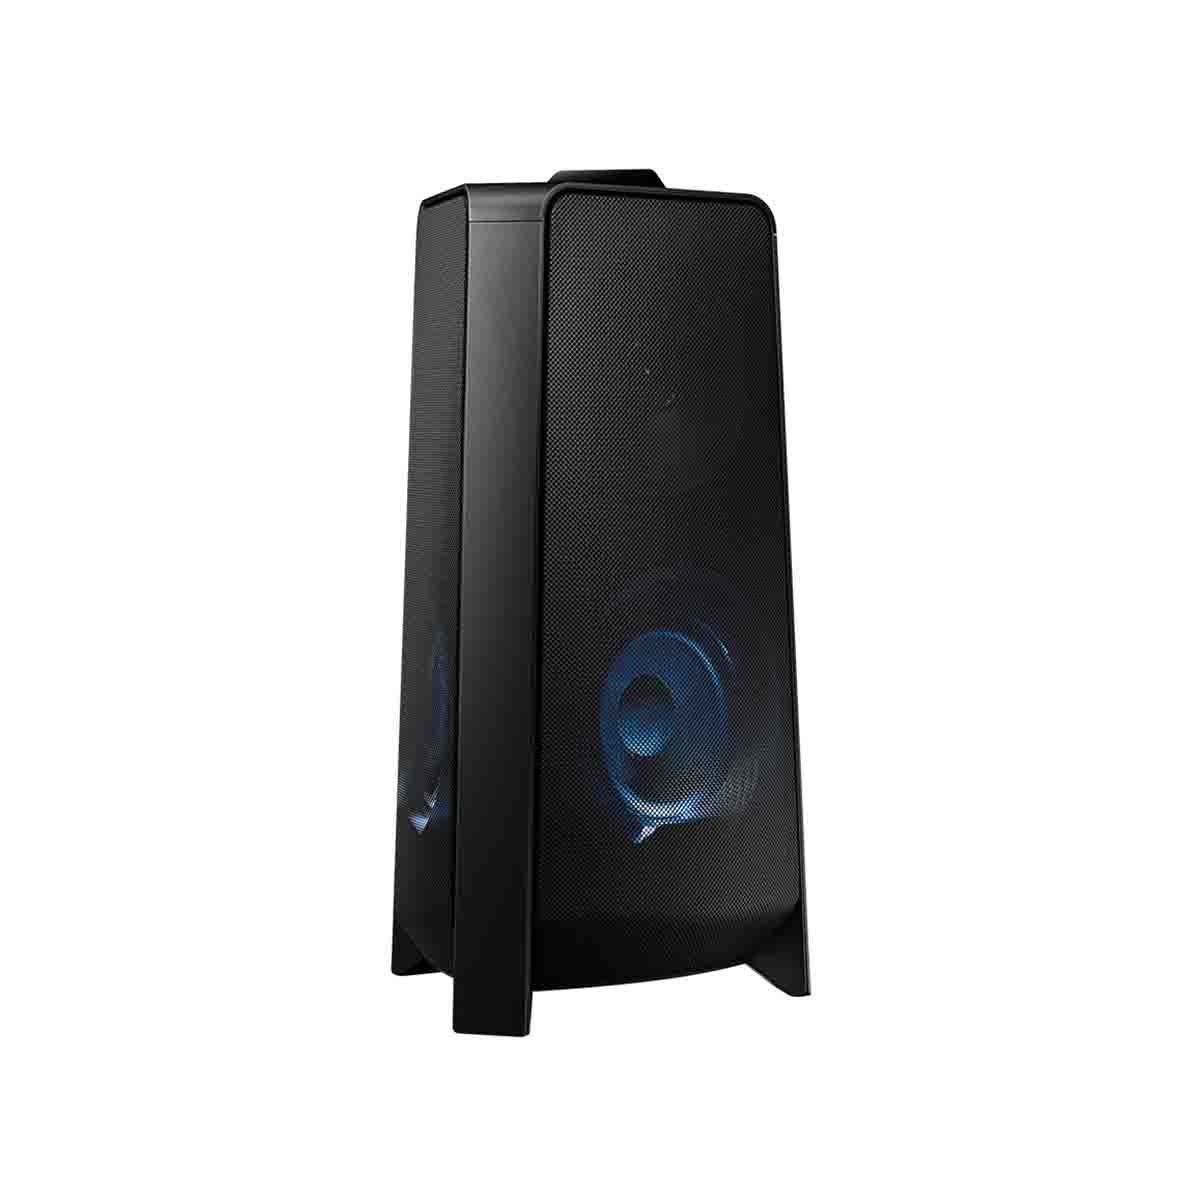 SAMSUNG ชุดขยายเสียงลำโพง บูลทูธ รุ่น MX-T50/XT Samsung Sound Tower